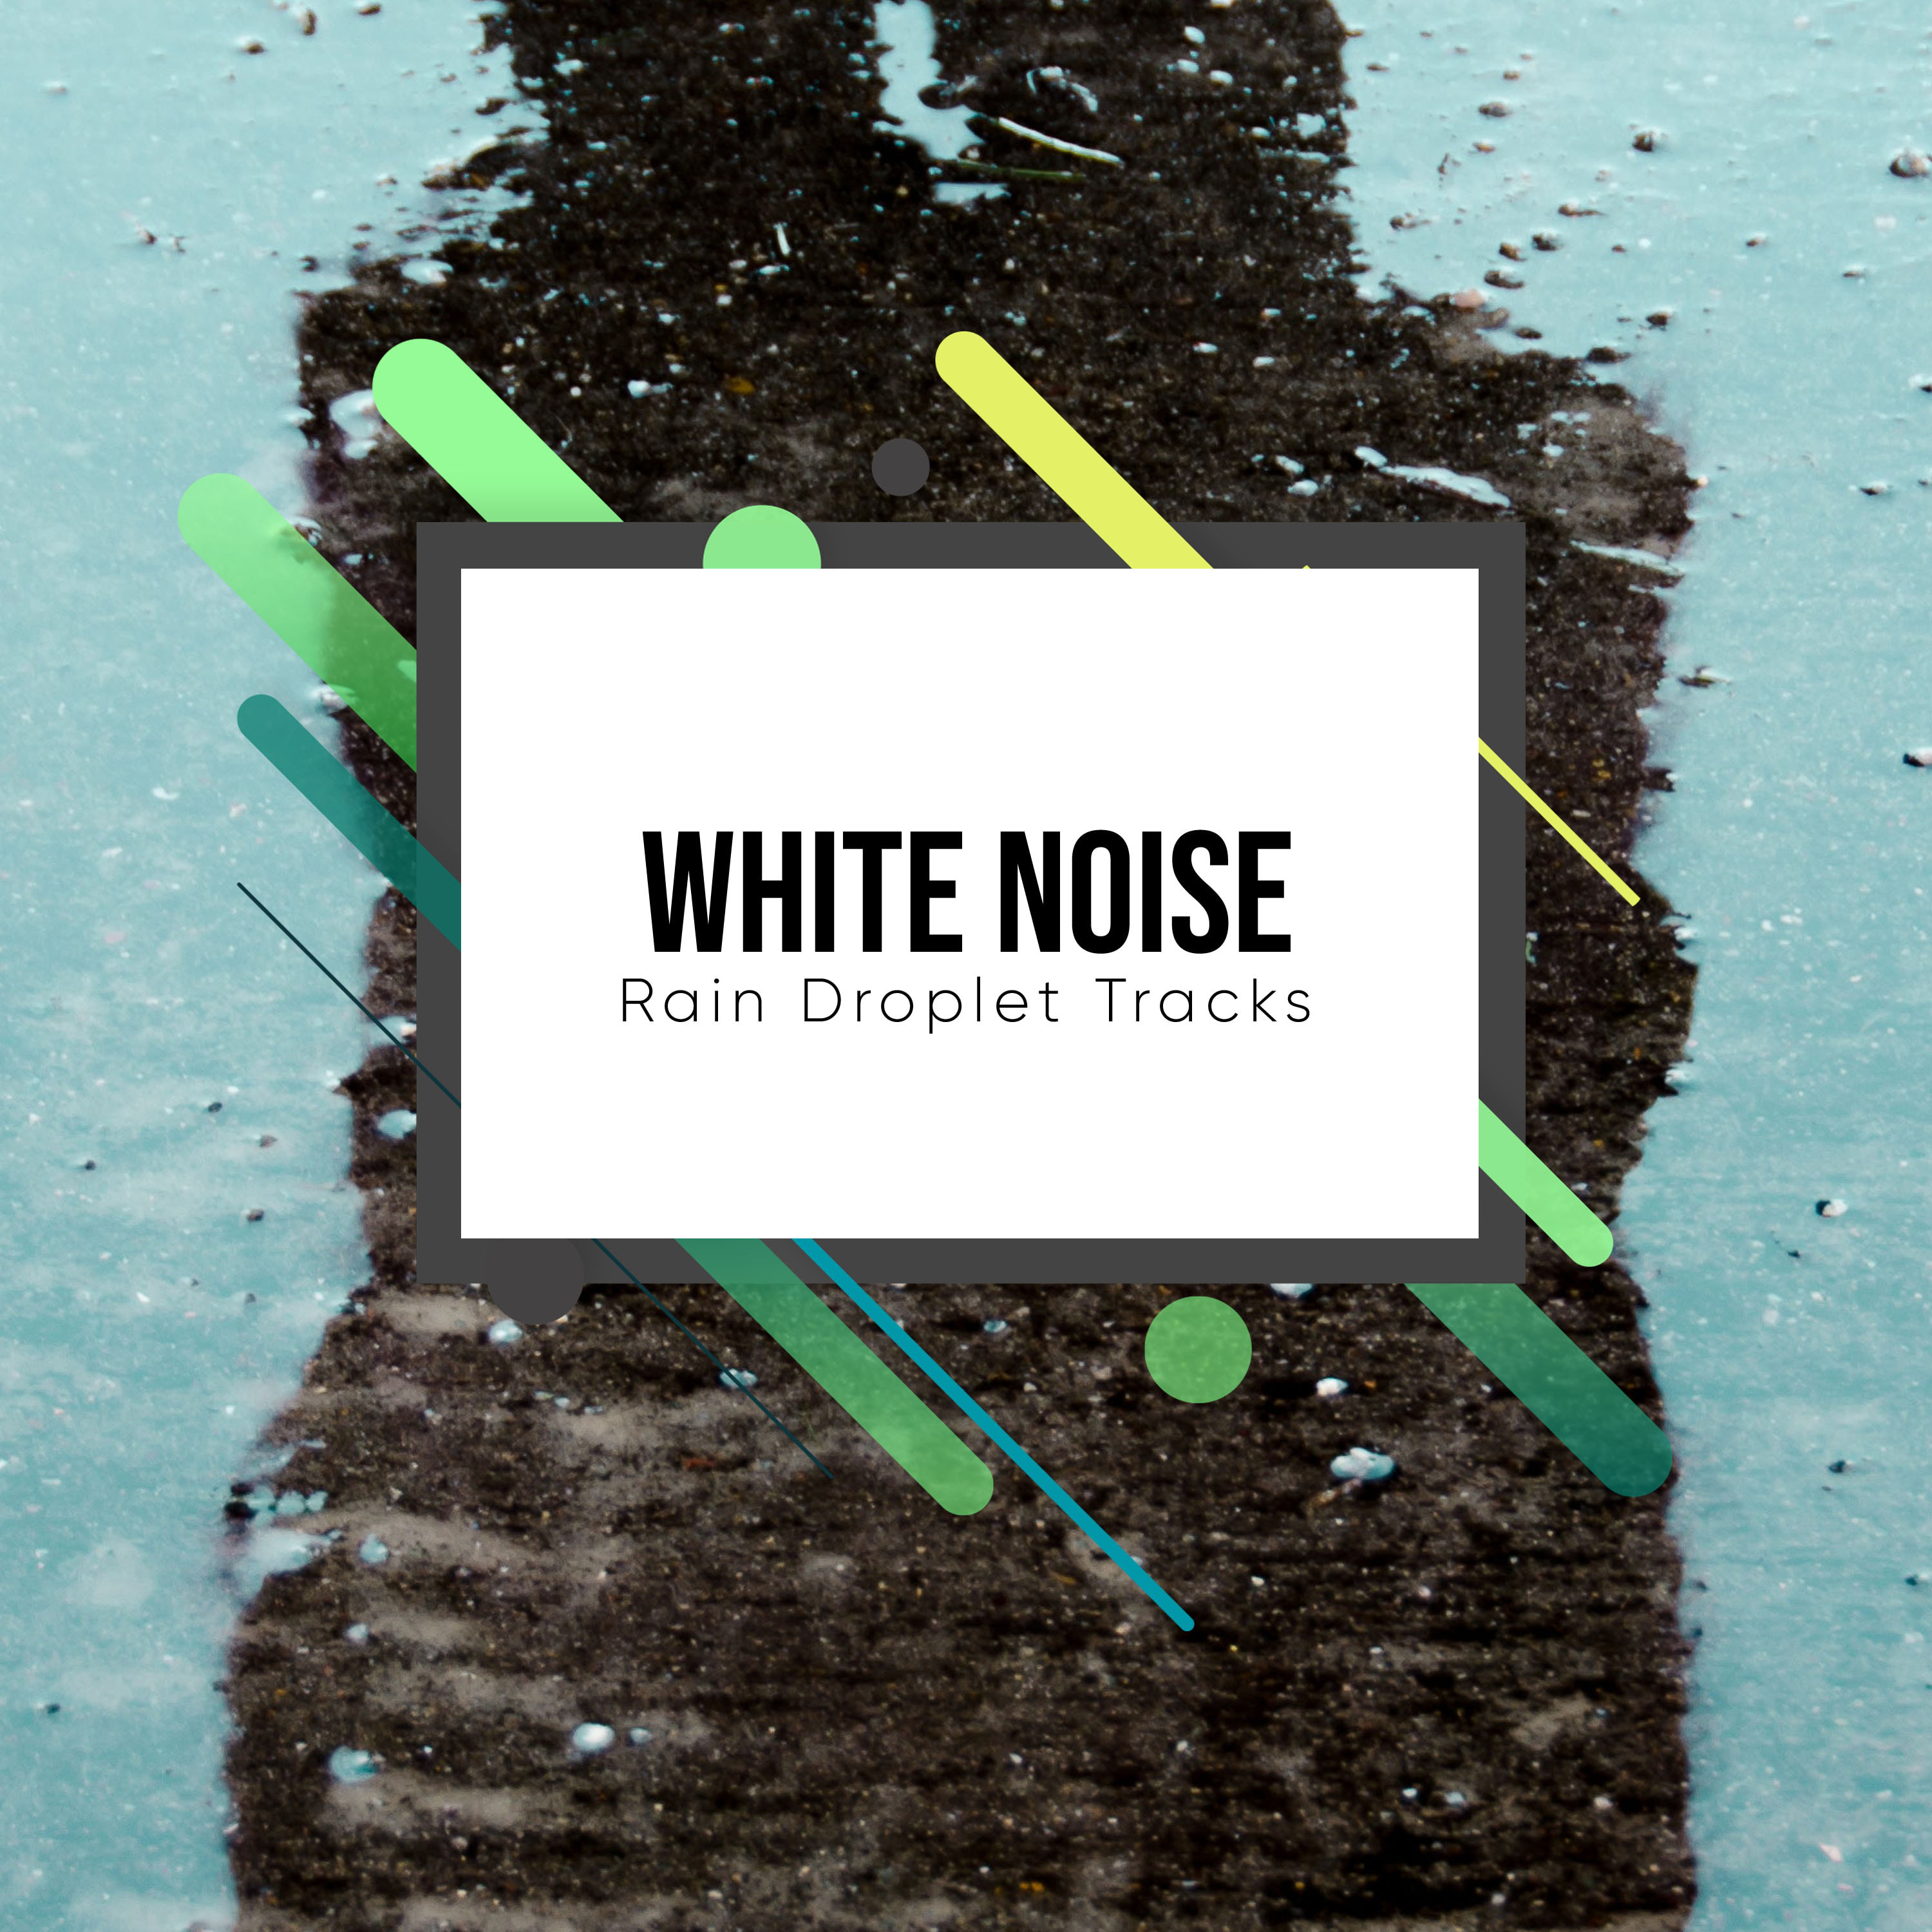 #17 White Noise Rain Droplet Tracks for Yoga or Spa